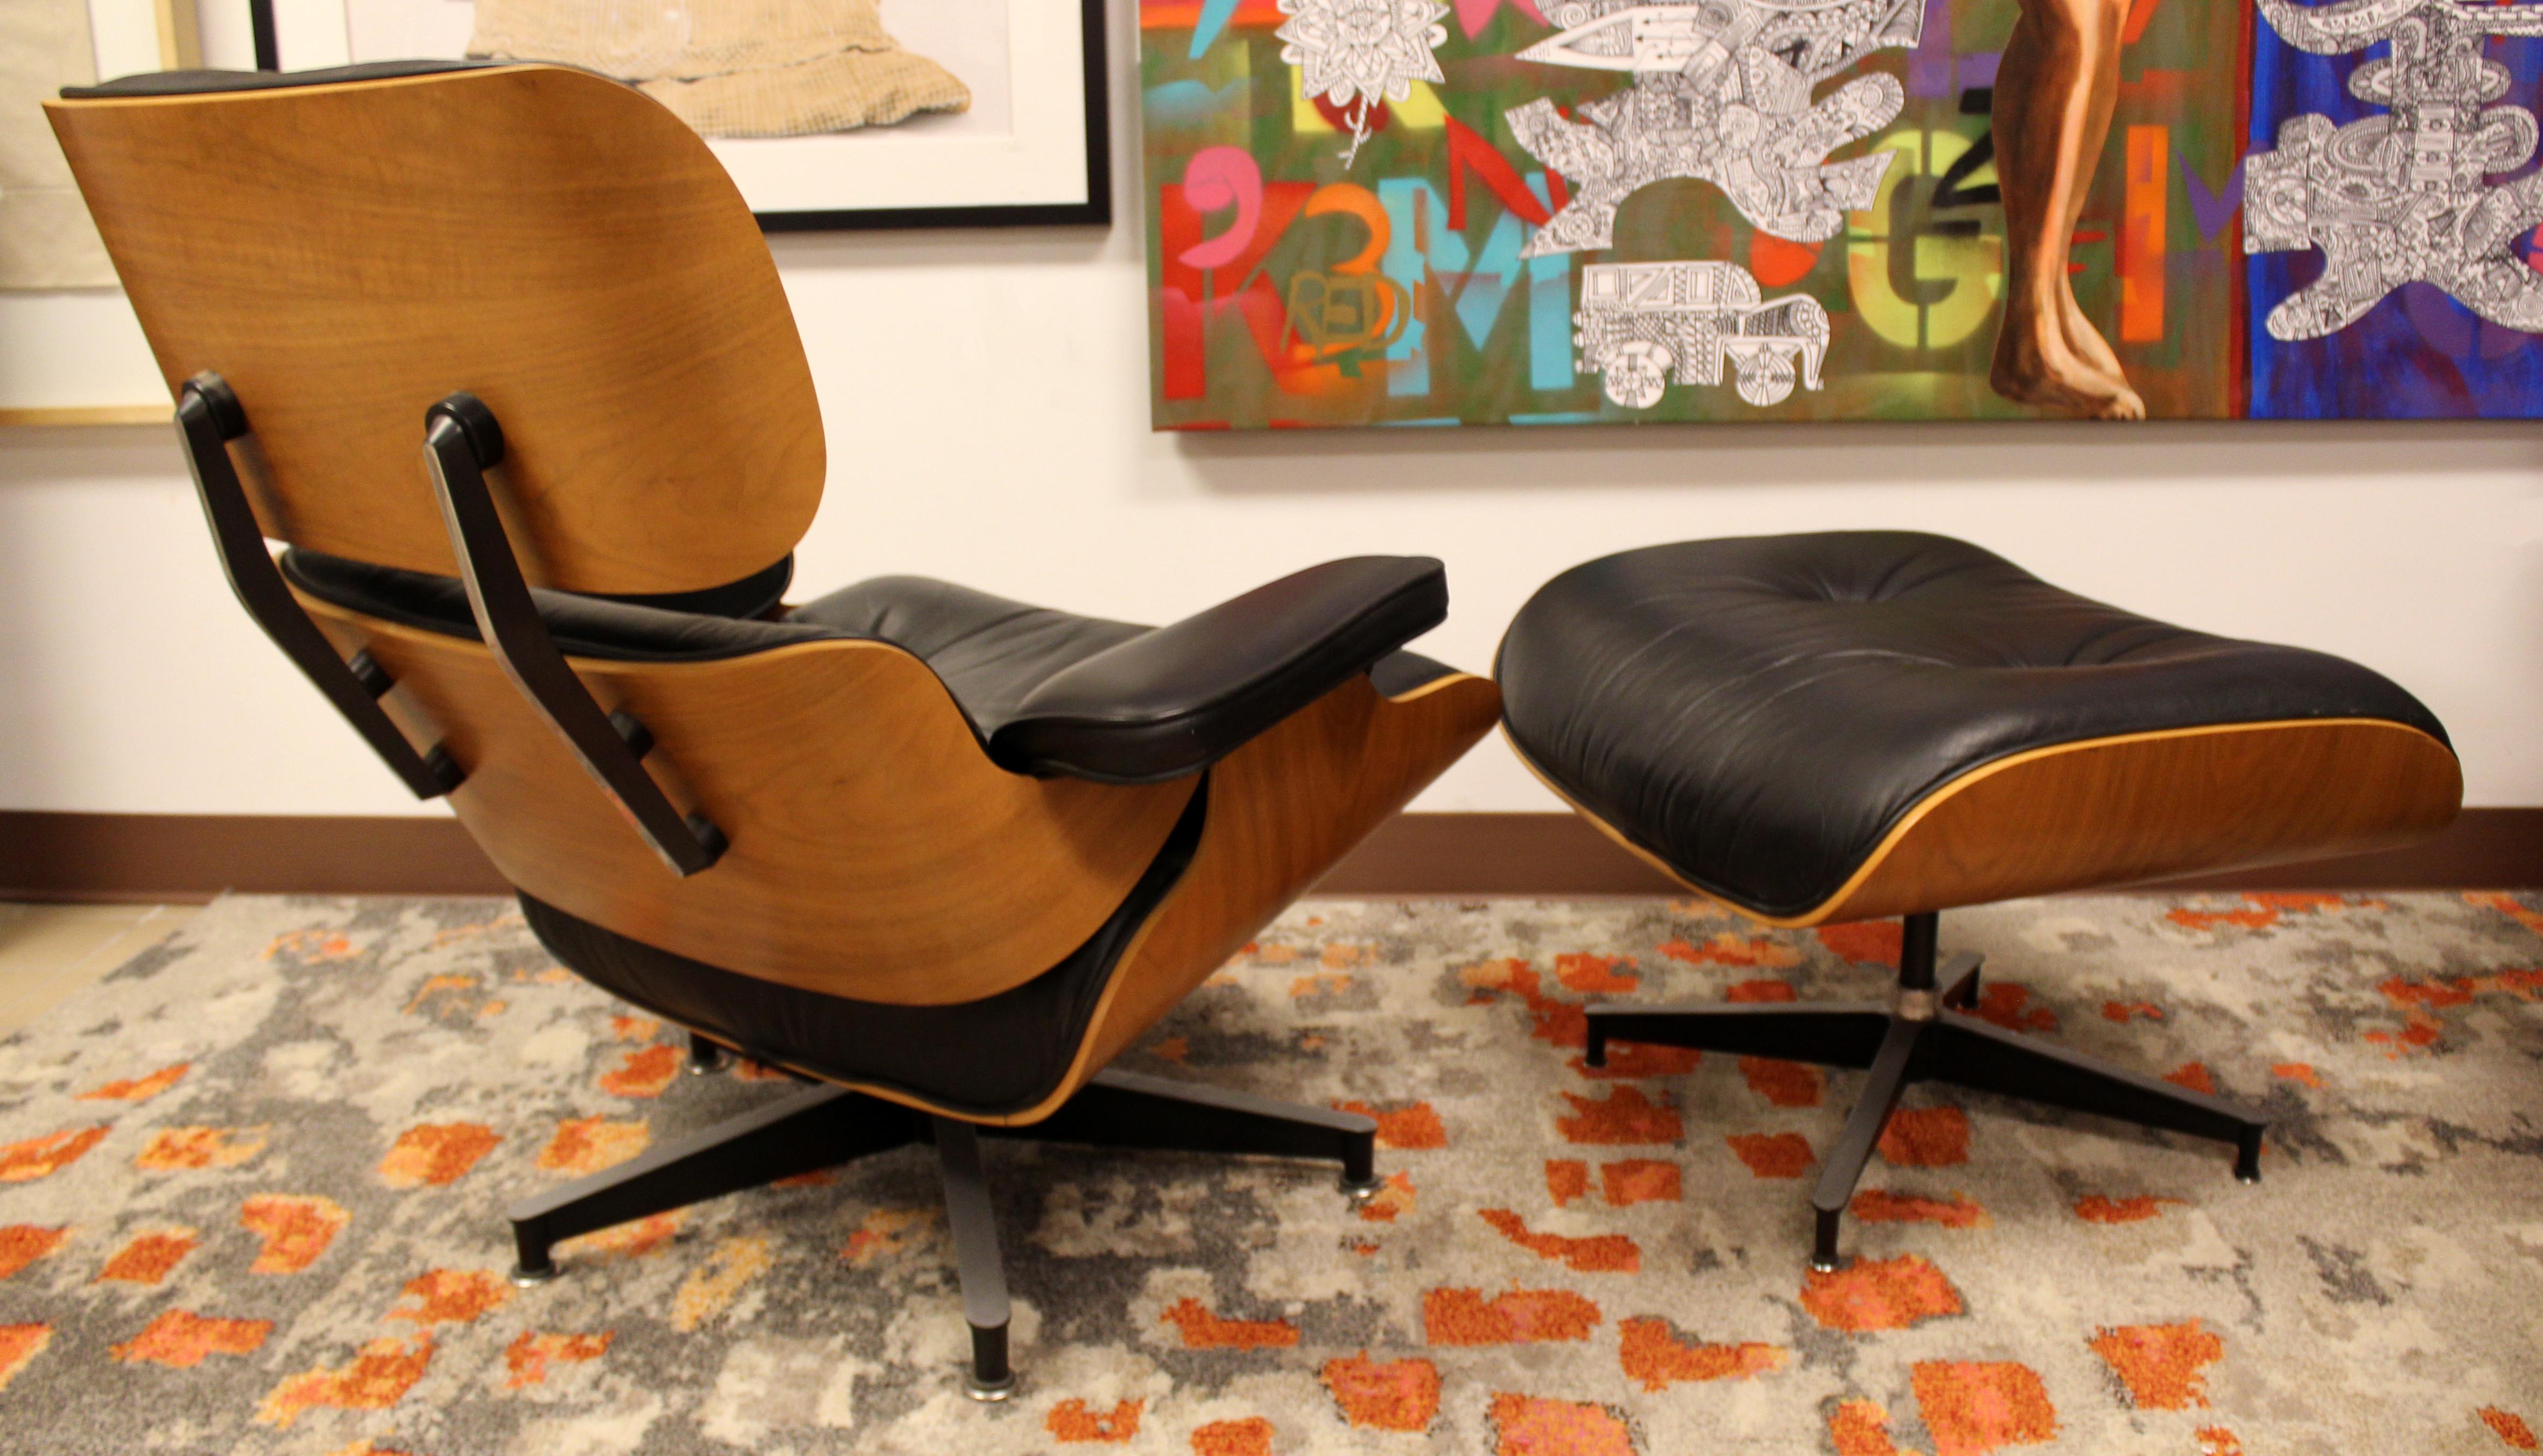 Late 20th Century Mid-Century Modern Eames Herman Miller Classic Walnut Lounge Chair Ottoman 1980s